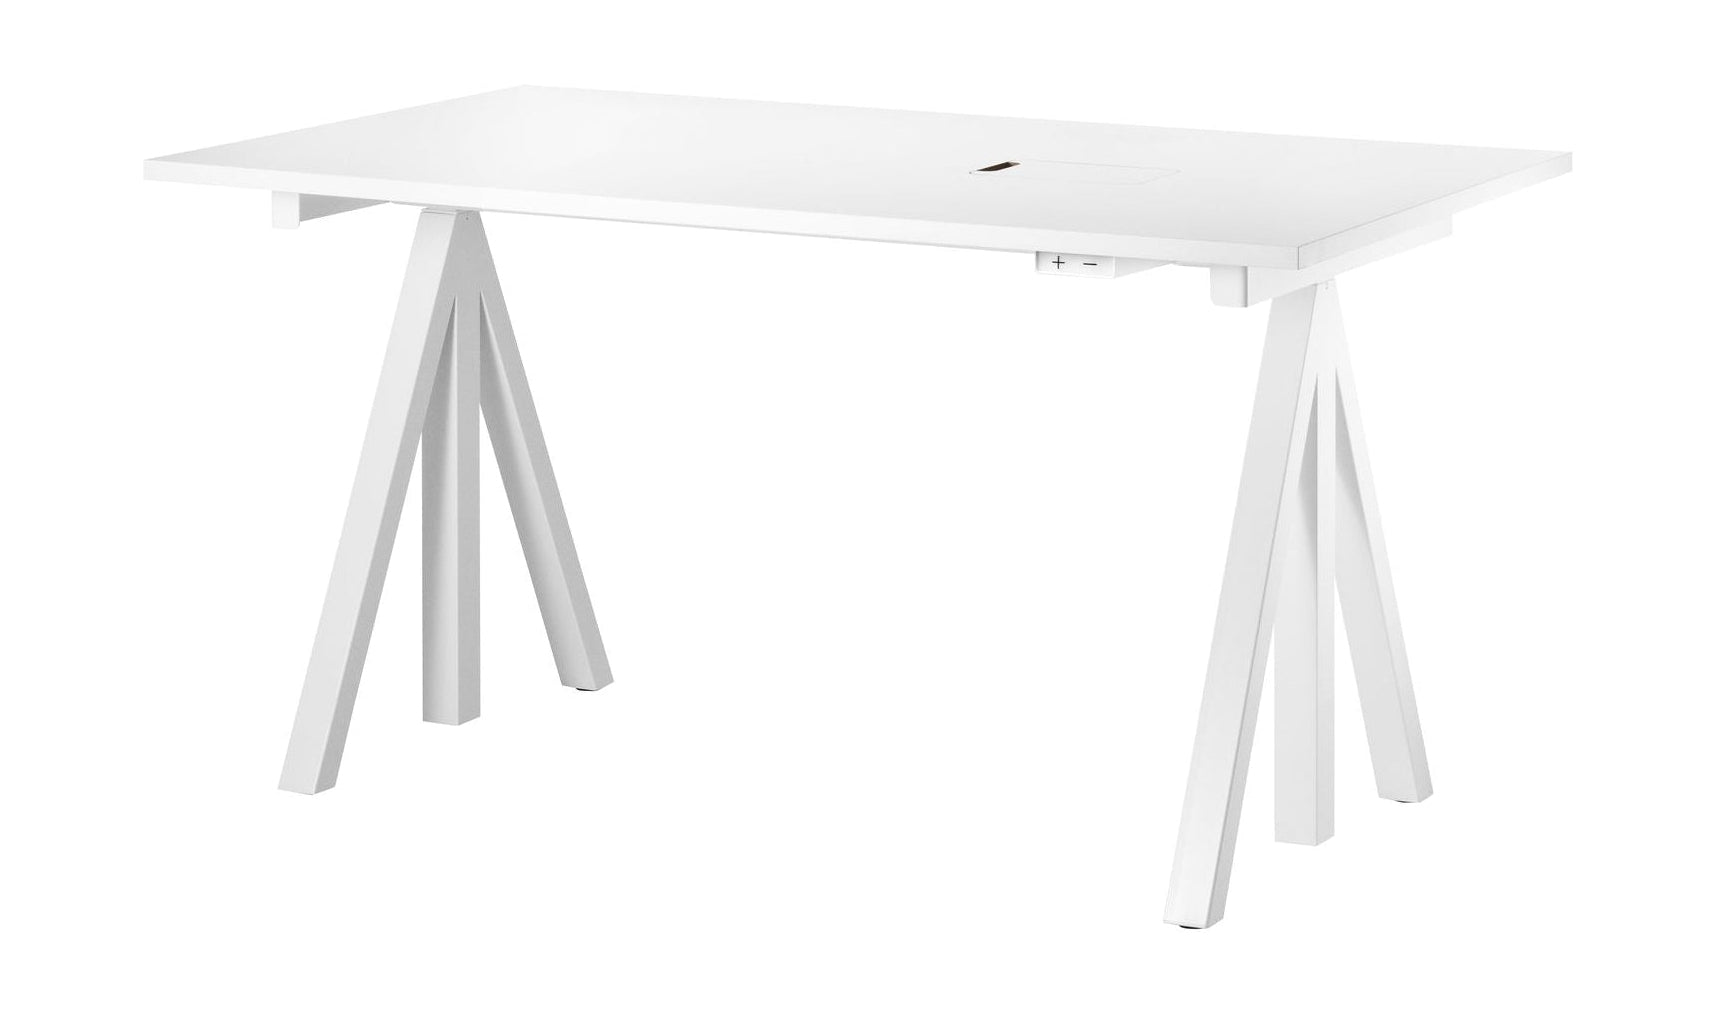 String Furniture Works Work Table 78x140 Cm, White Laminate